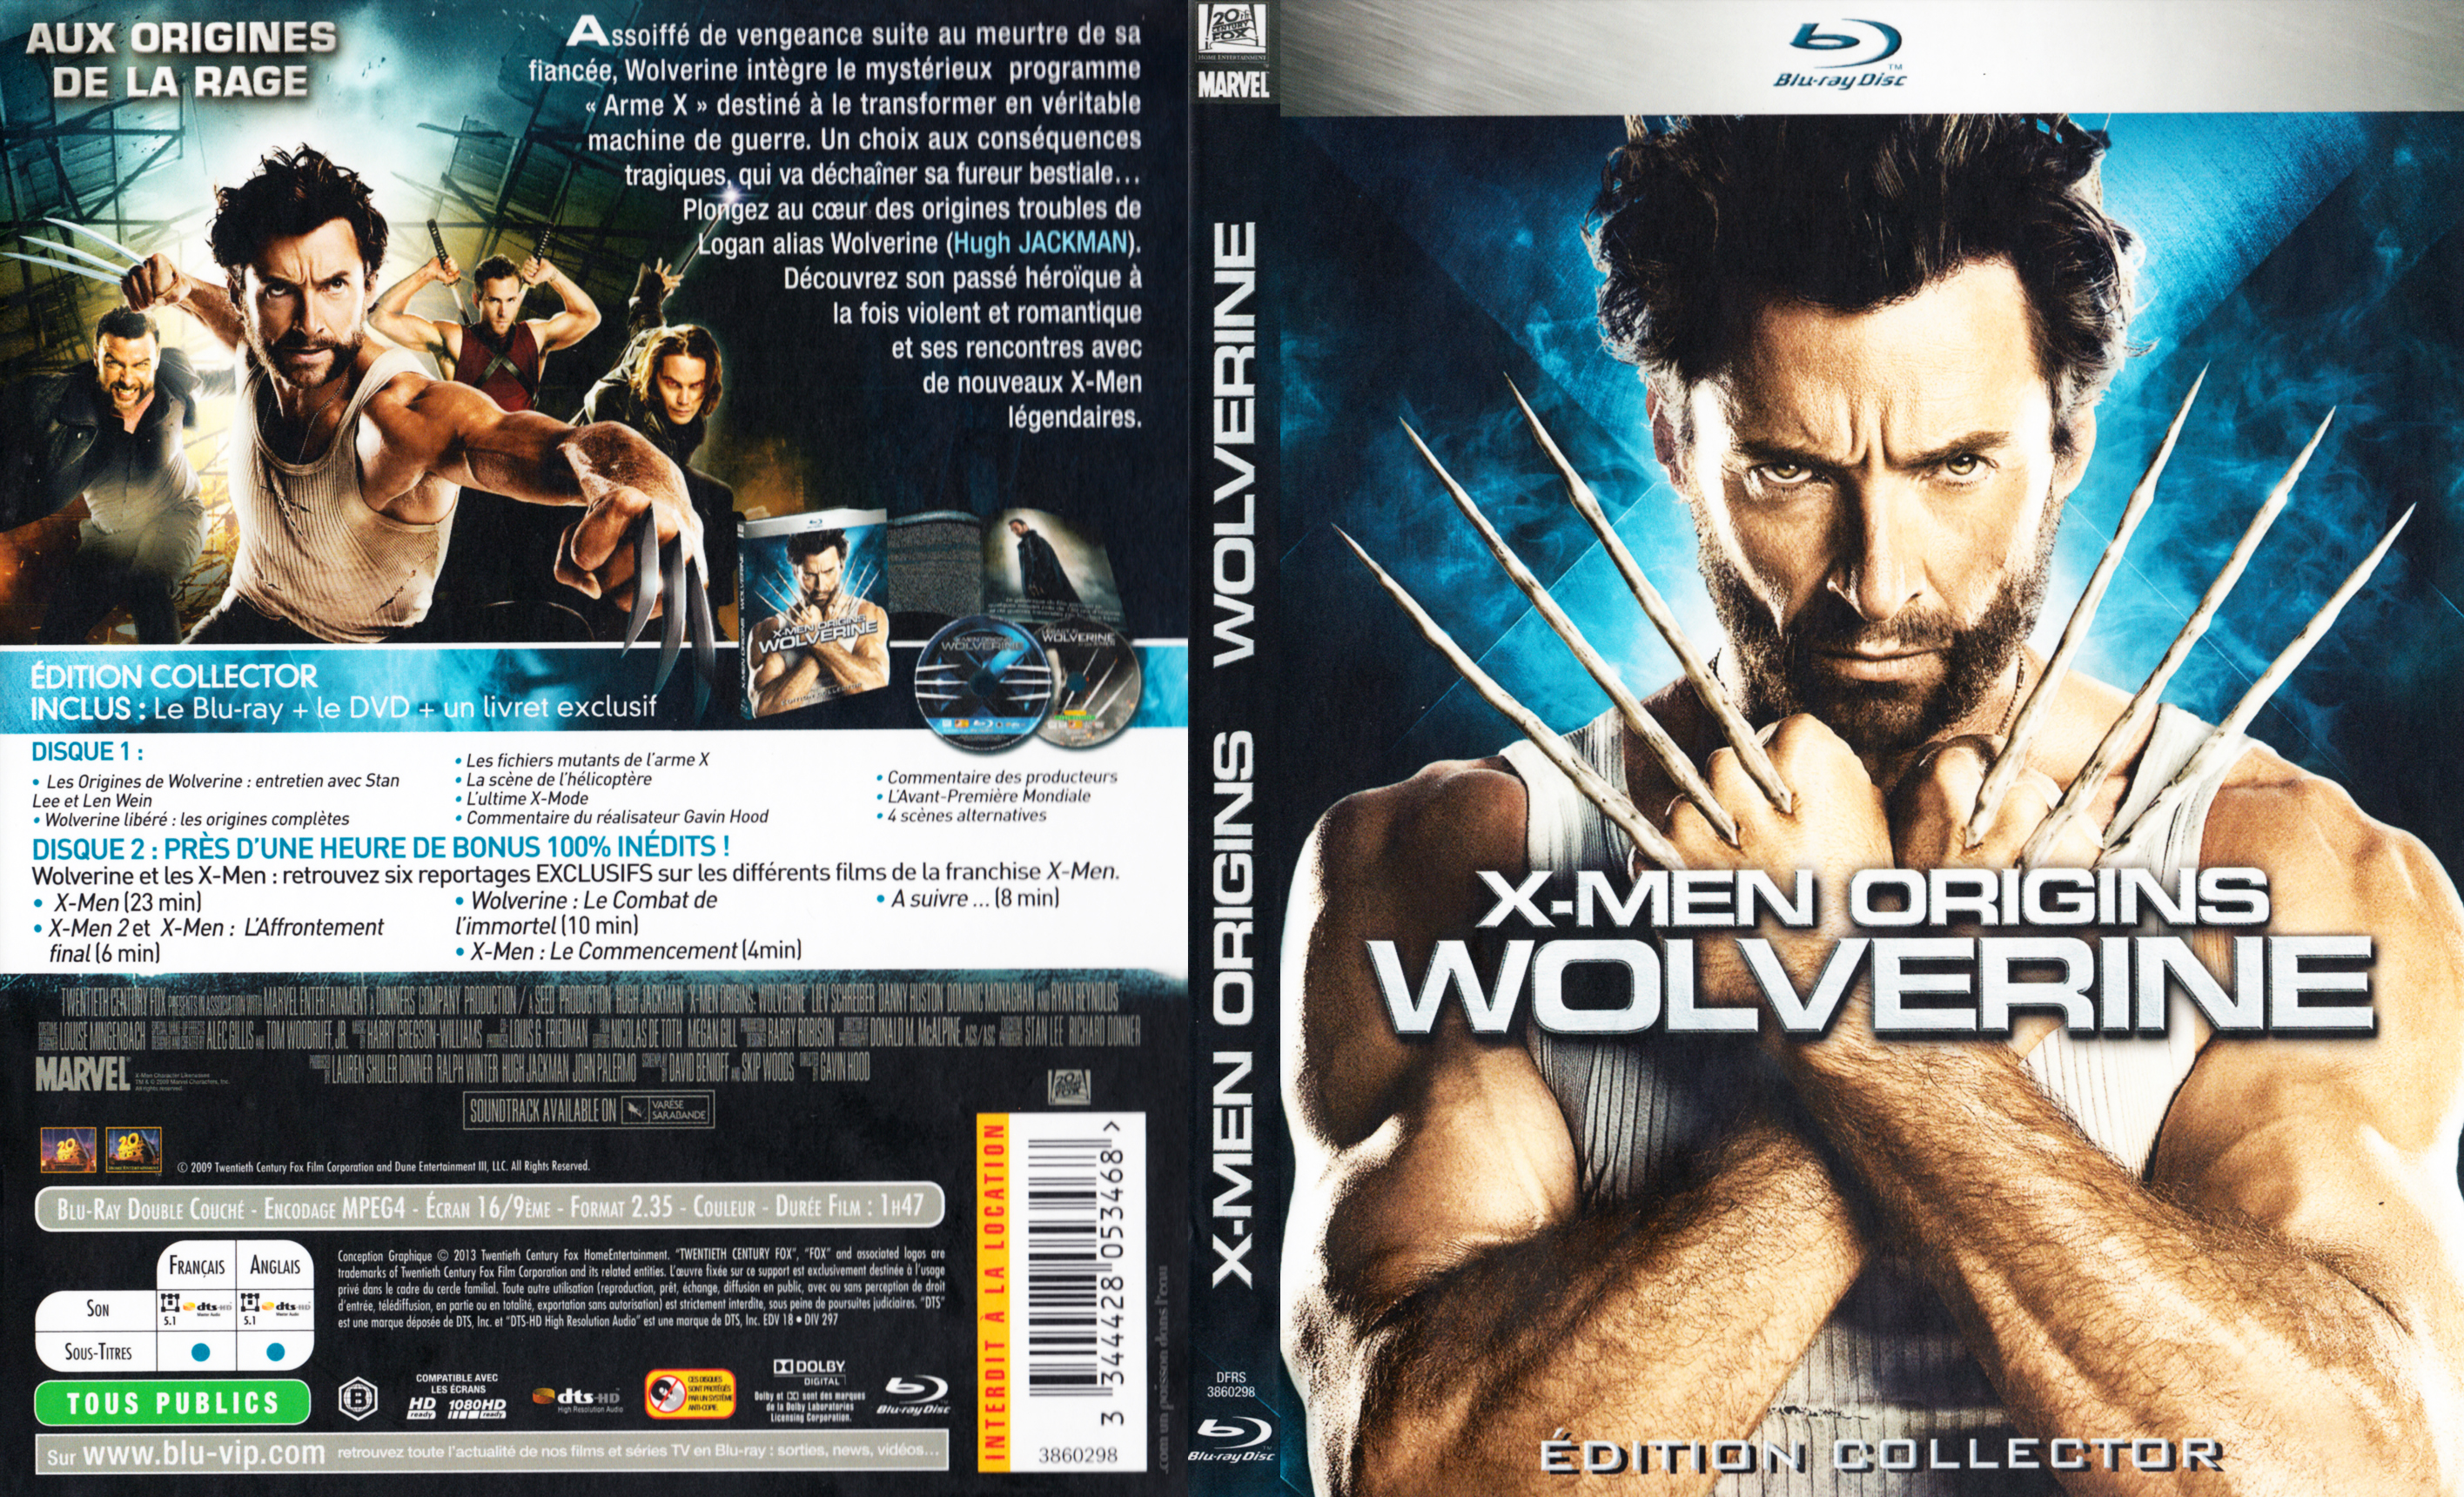 Jaquette DVD X-Men Origins Wolverine (BLU-RAY) v3